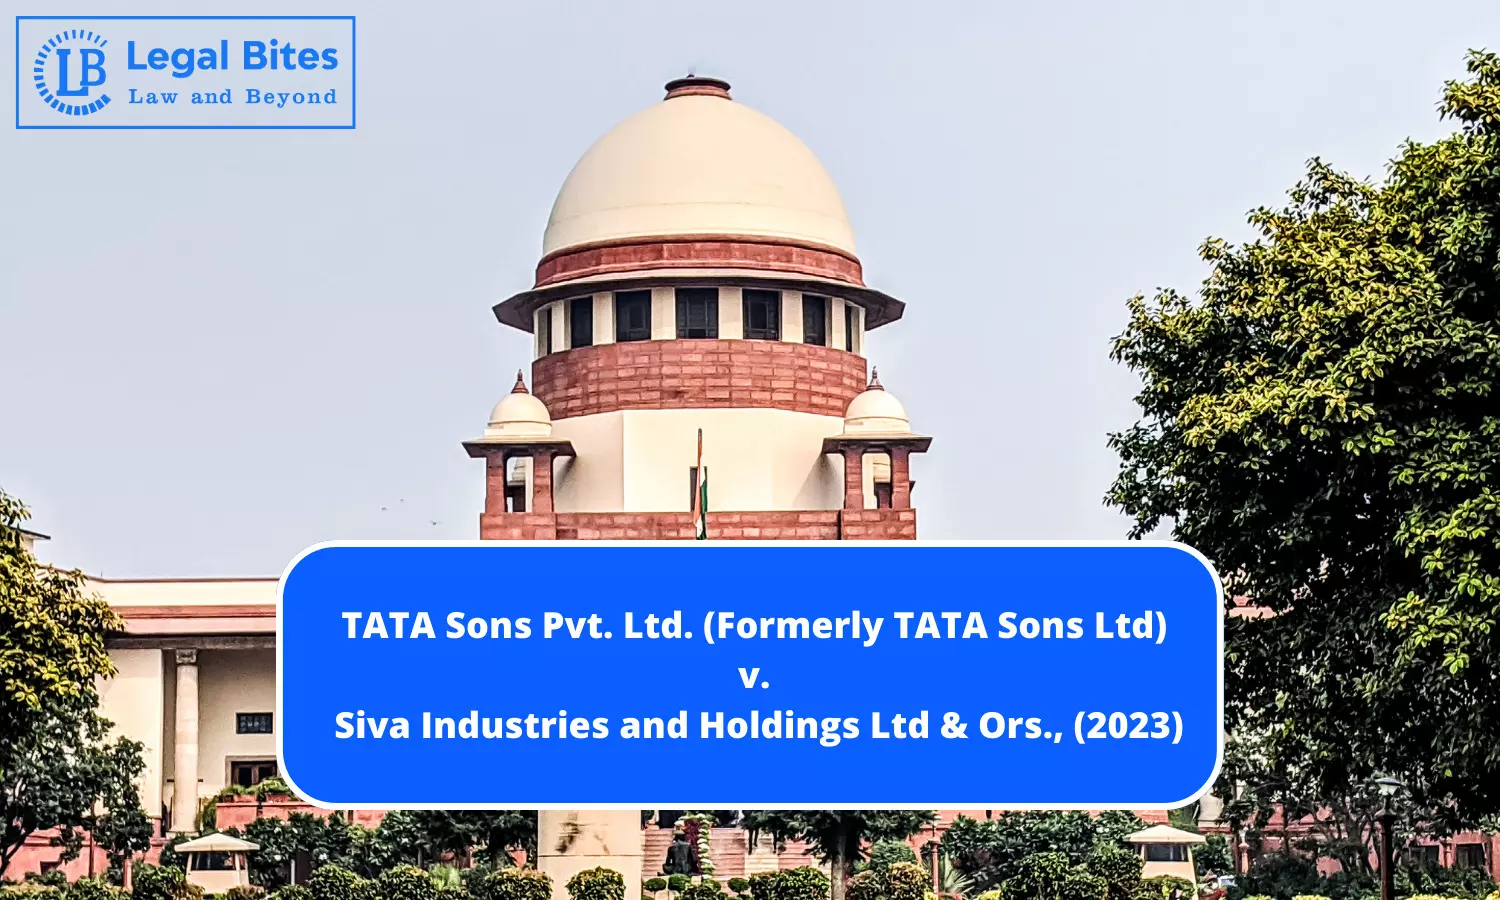 Case Summary: TATA Sons Pvt. Ltd. (Formerly TATA Sons Ltd) v. Siva Industries and Holdings Ltd & Ors., (2023)